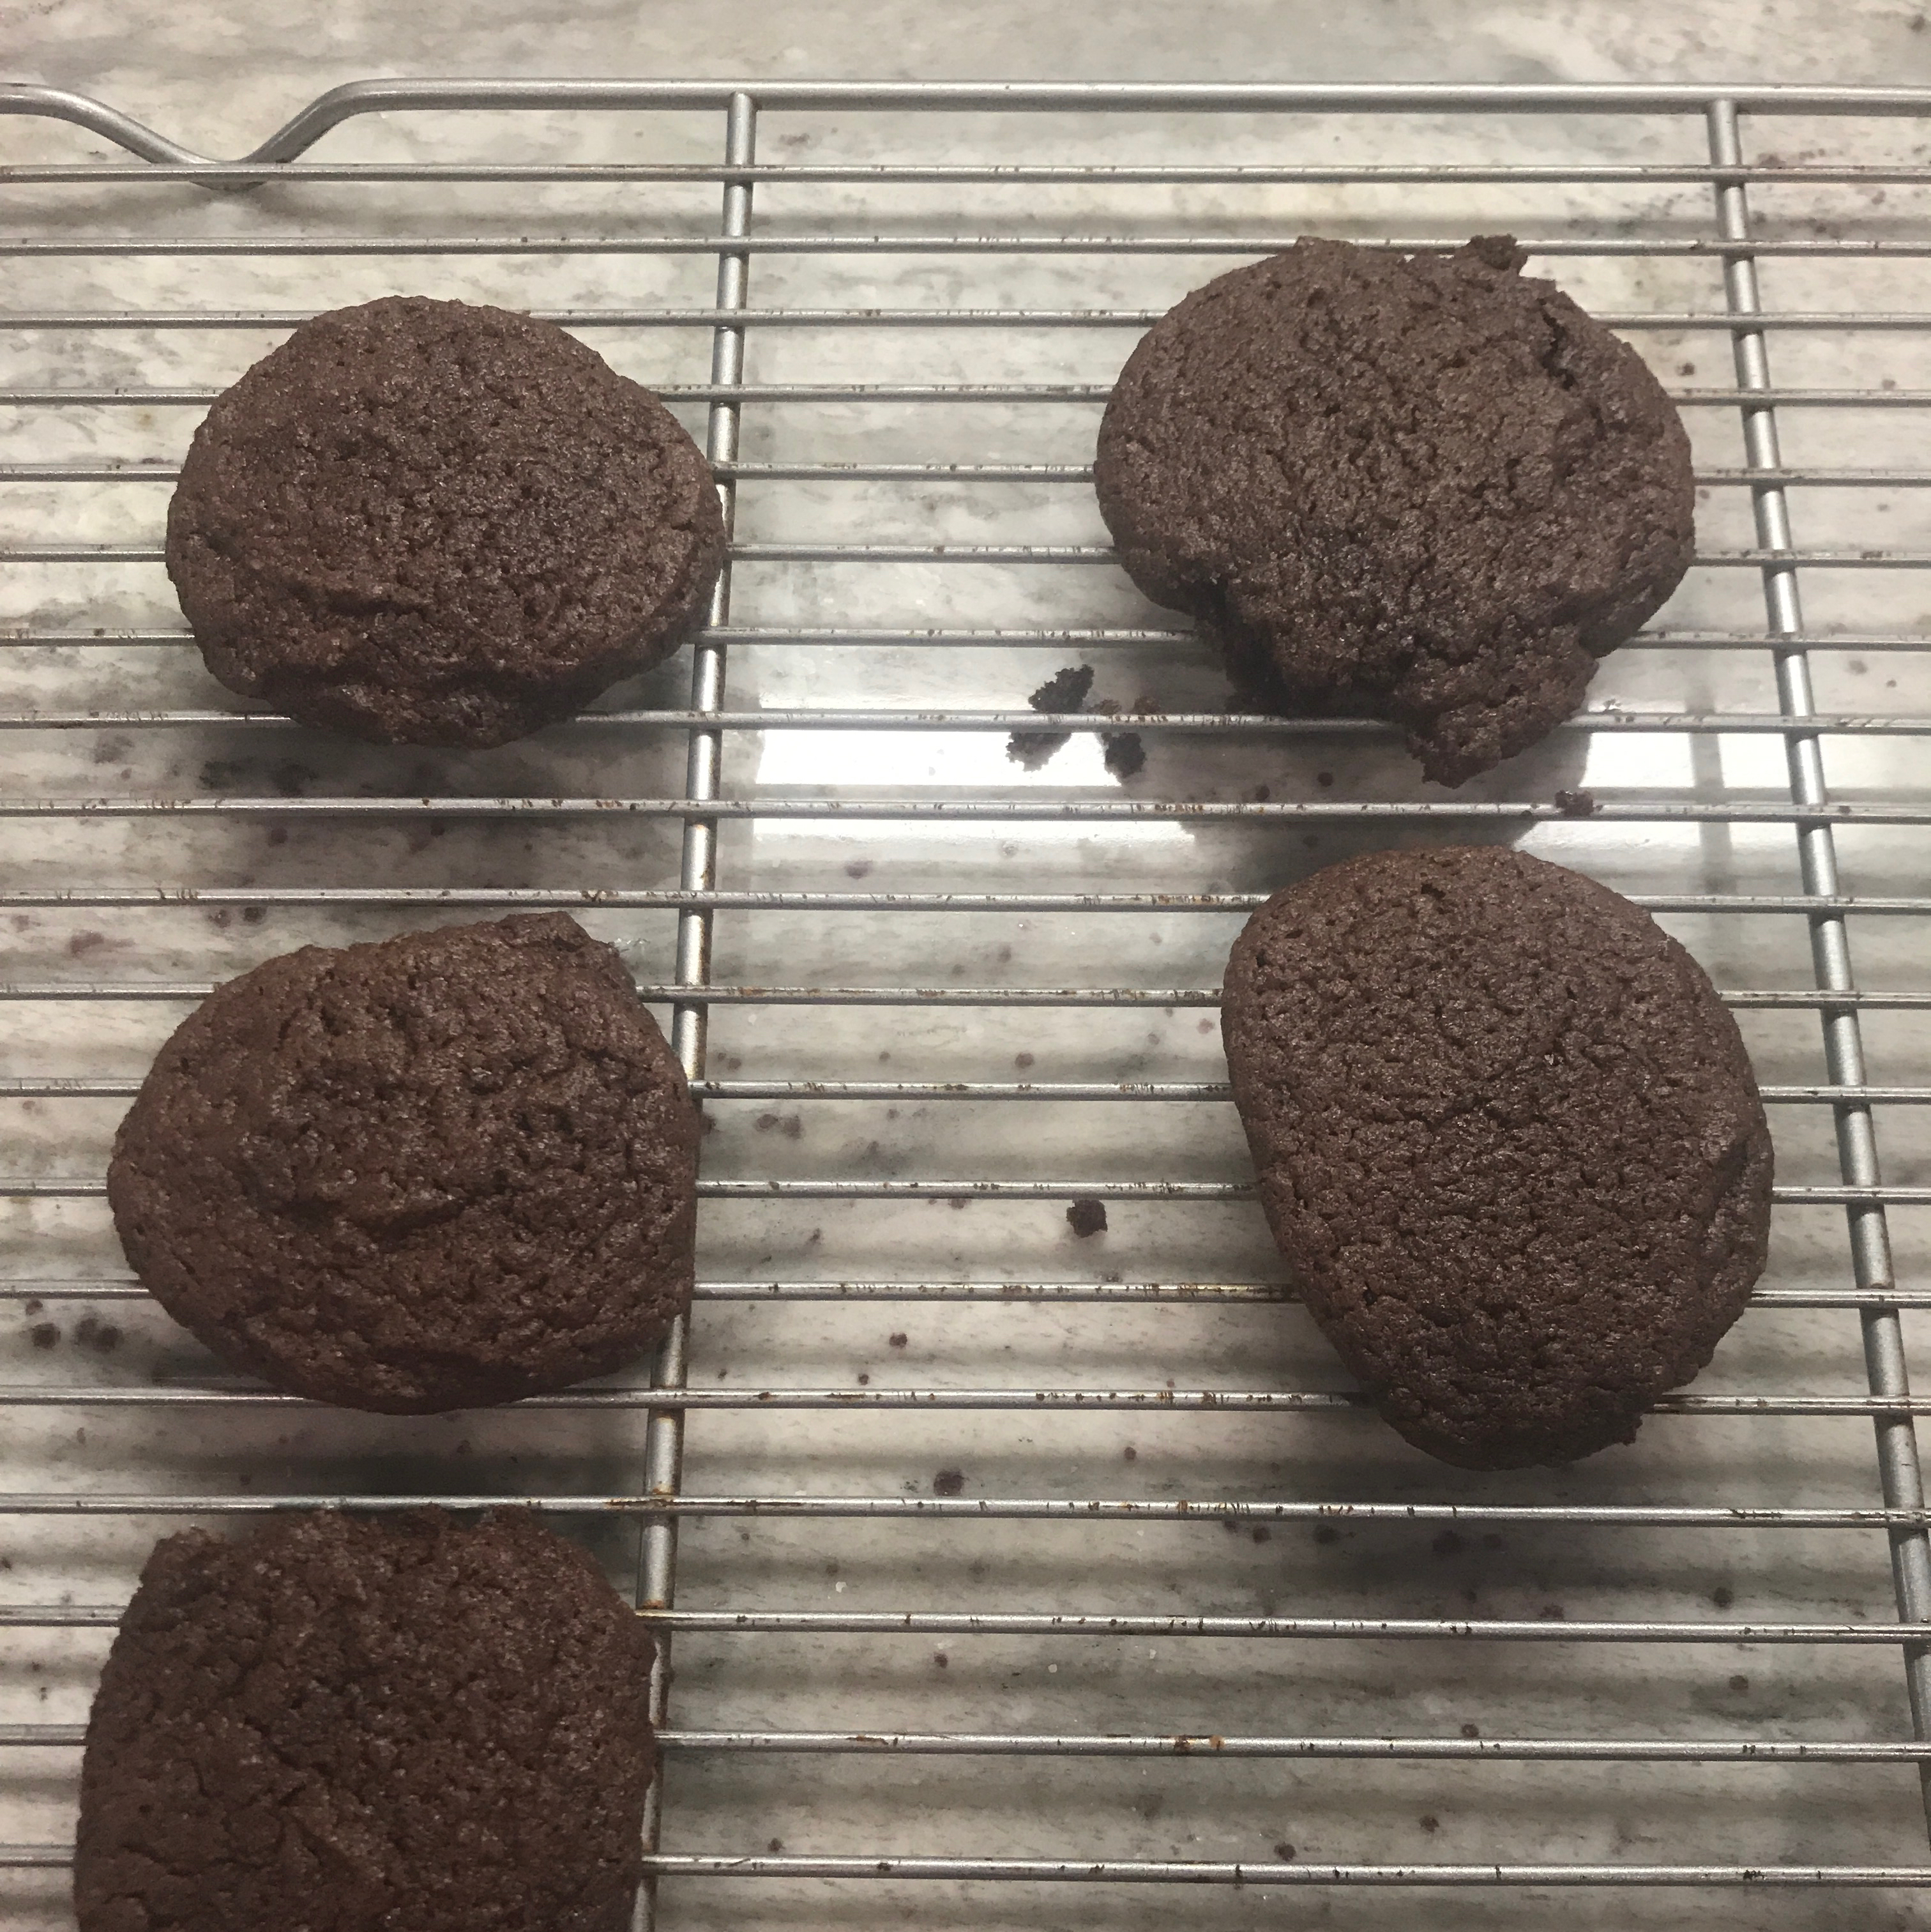 Ultimate Double Chocolate Cookies August Shipley